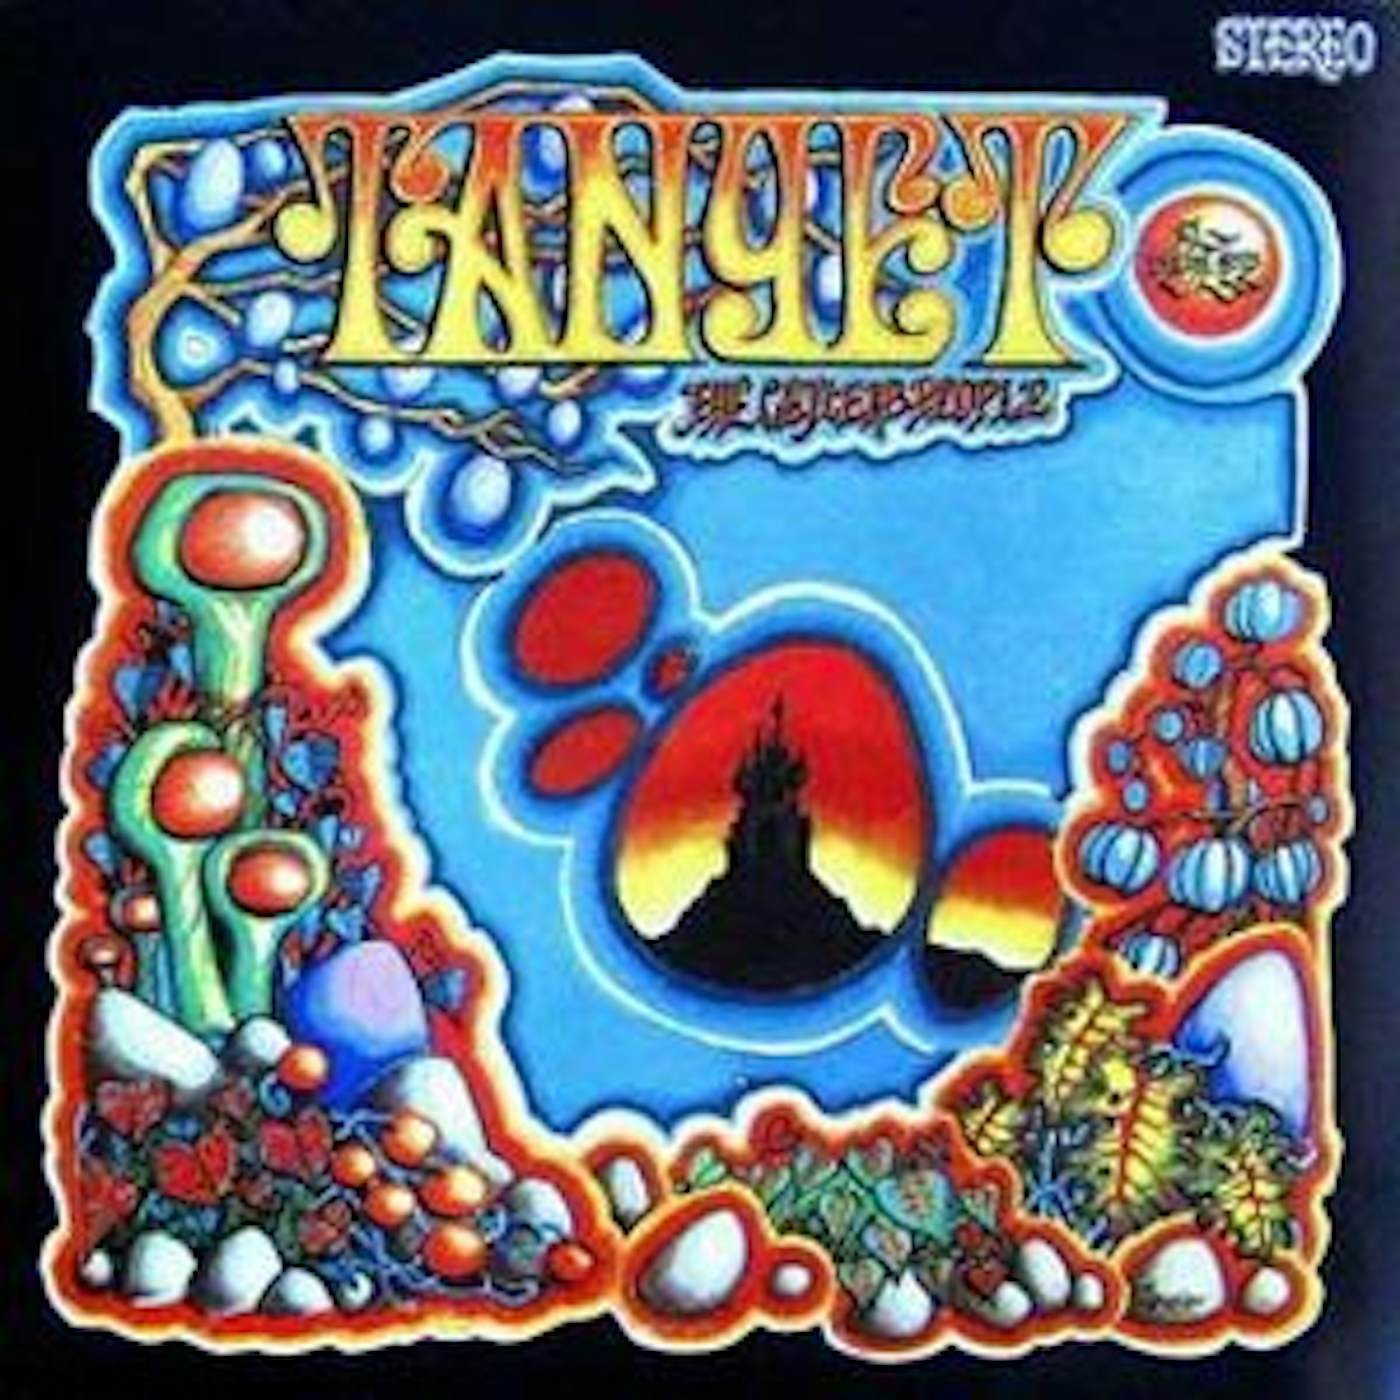 The Ceyleib People Tanyet Vinyl Record